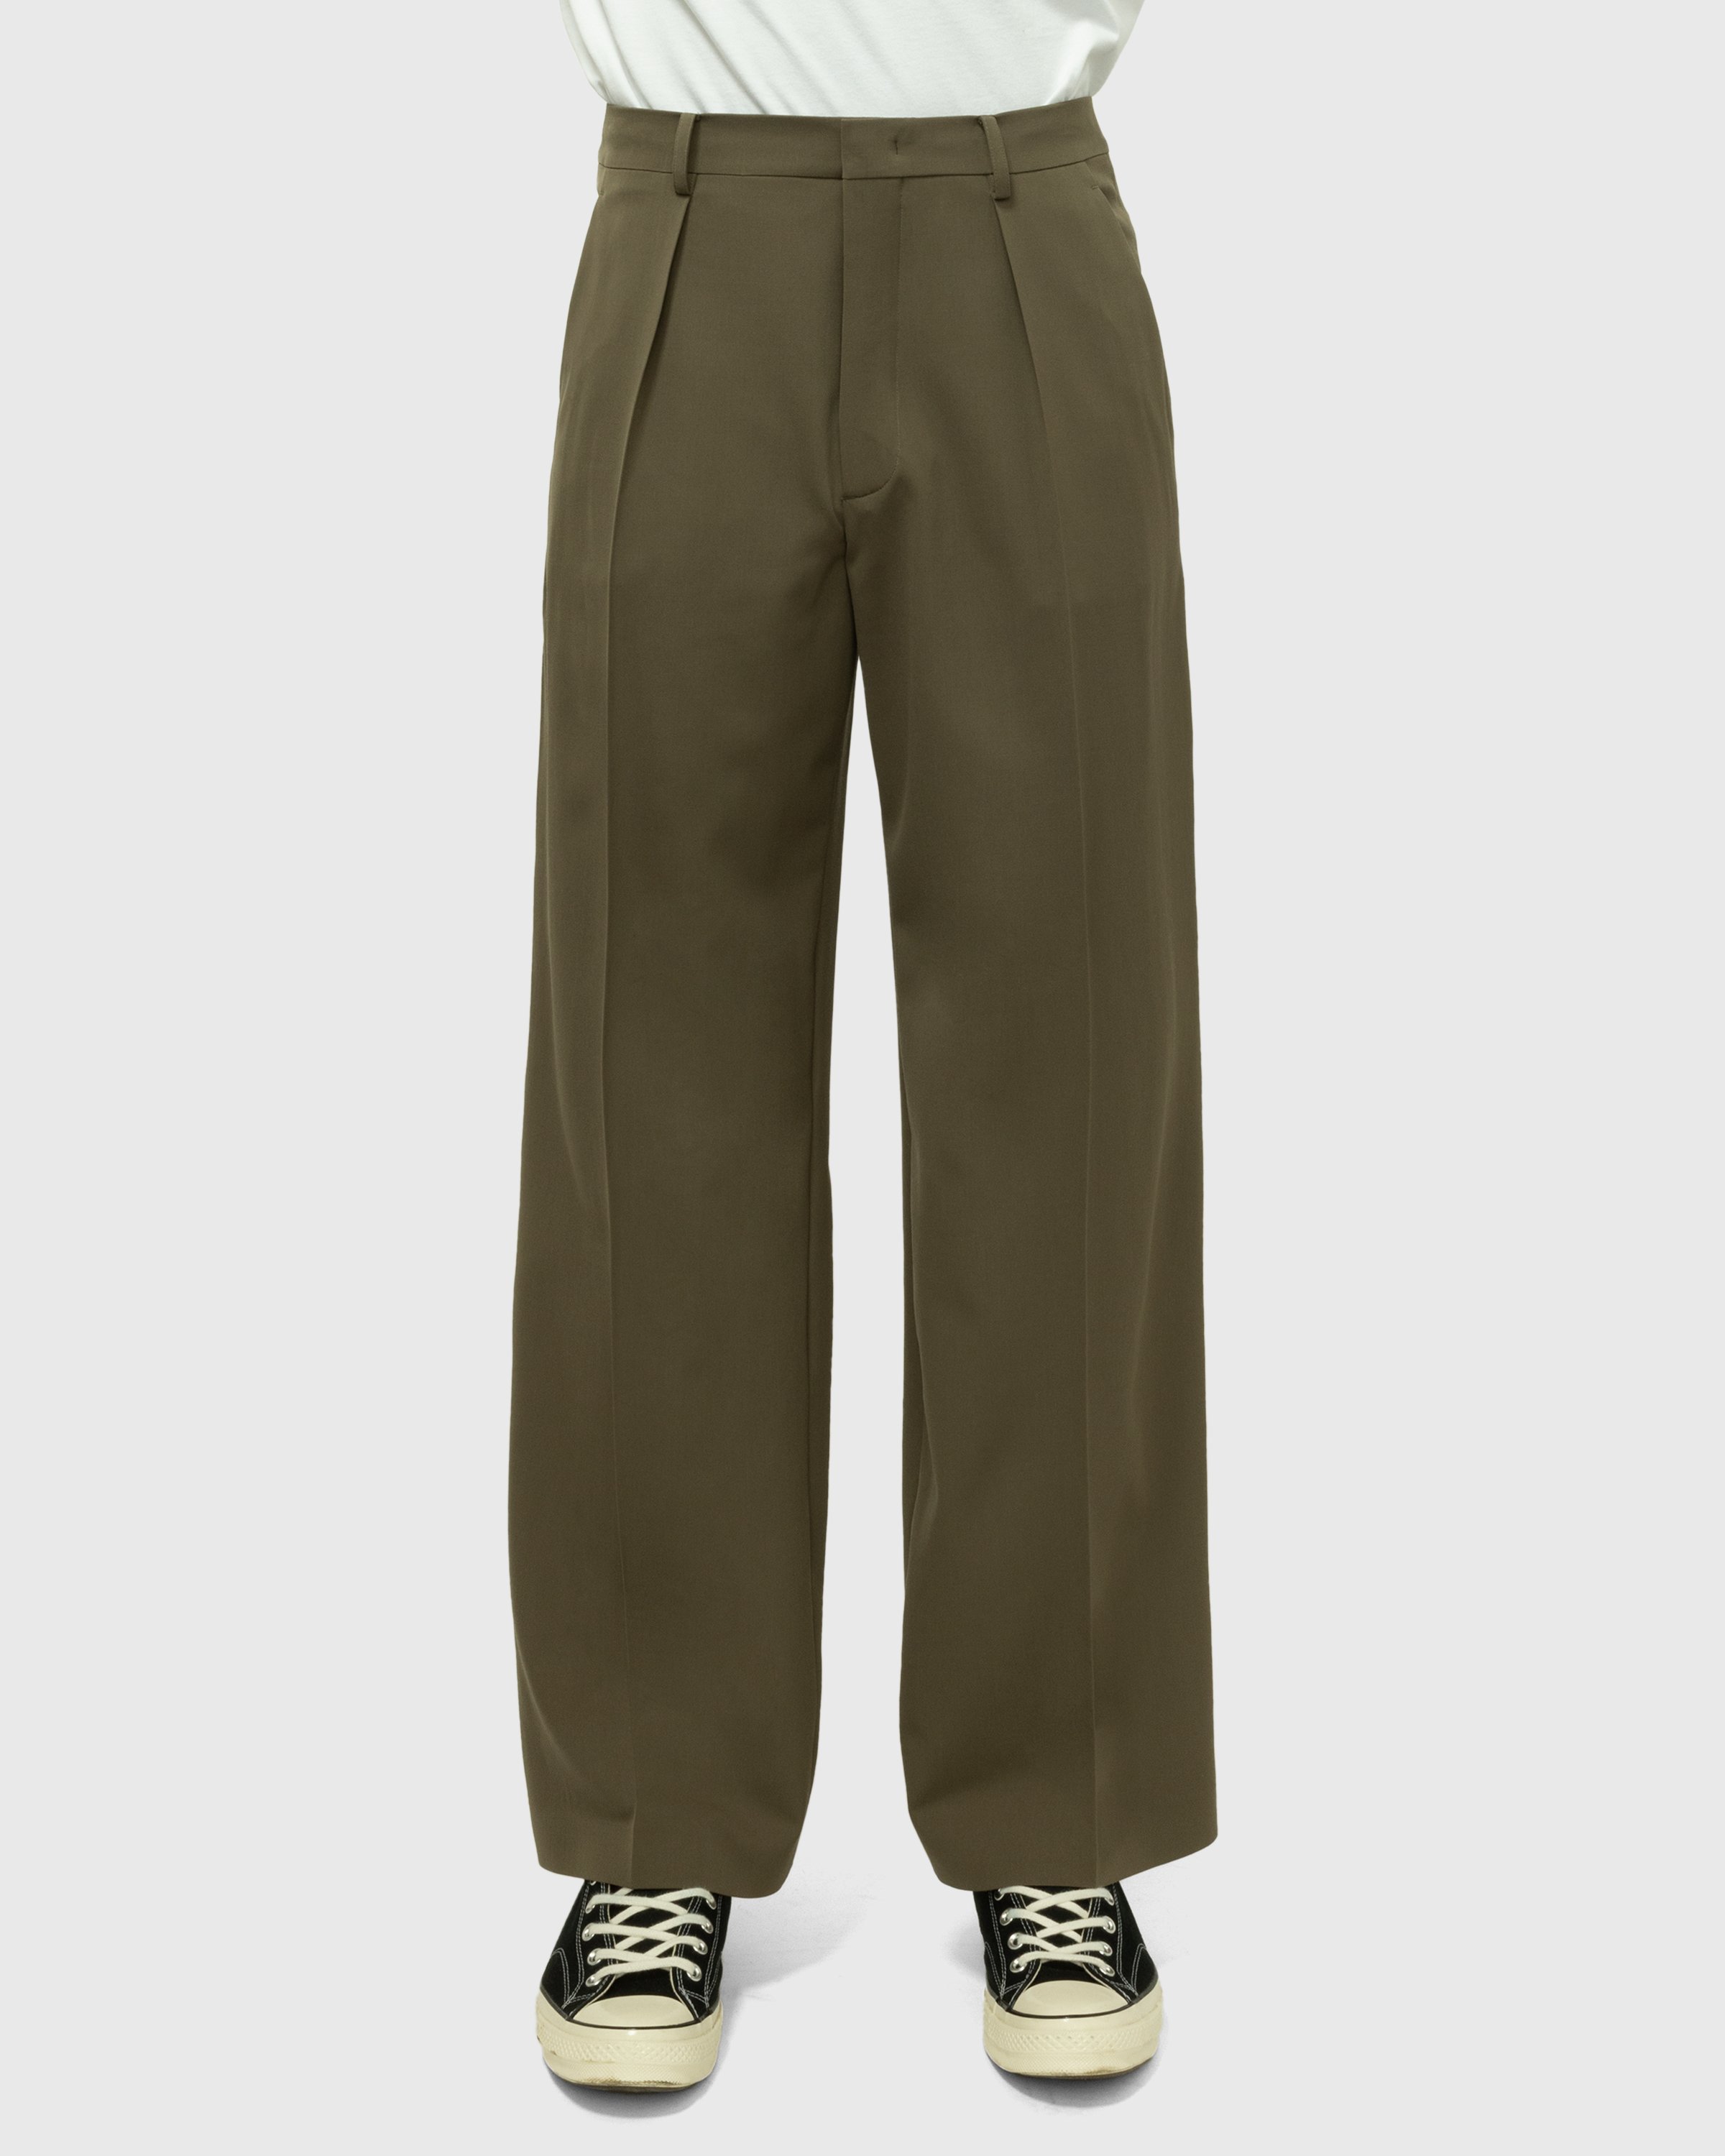 Jean Paul Gaultier - Classic Woven Trouser Khaki - Clothing - Brown - Image 2